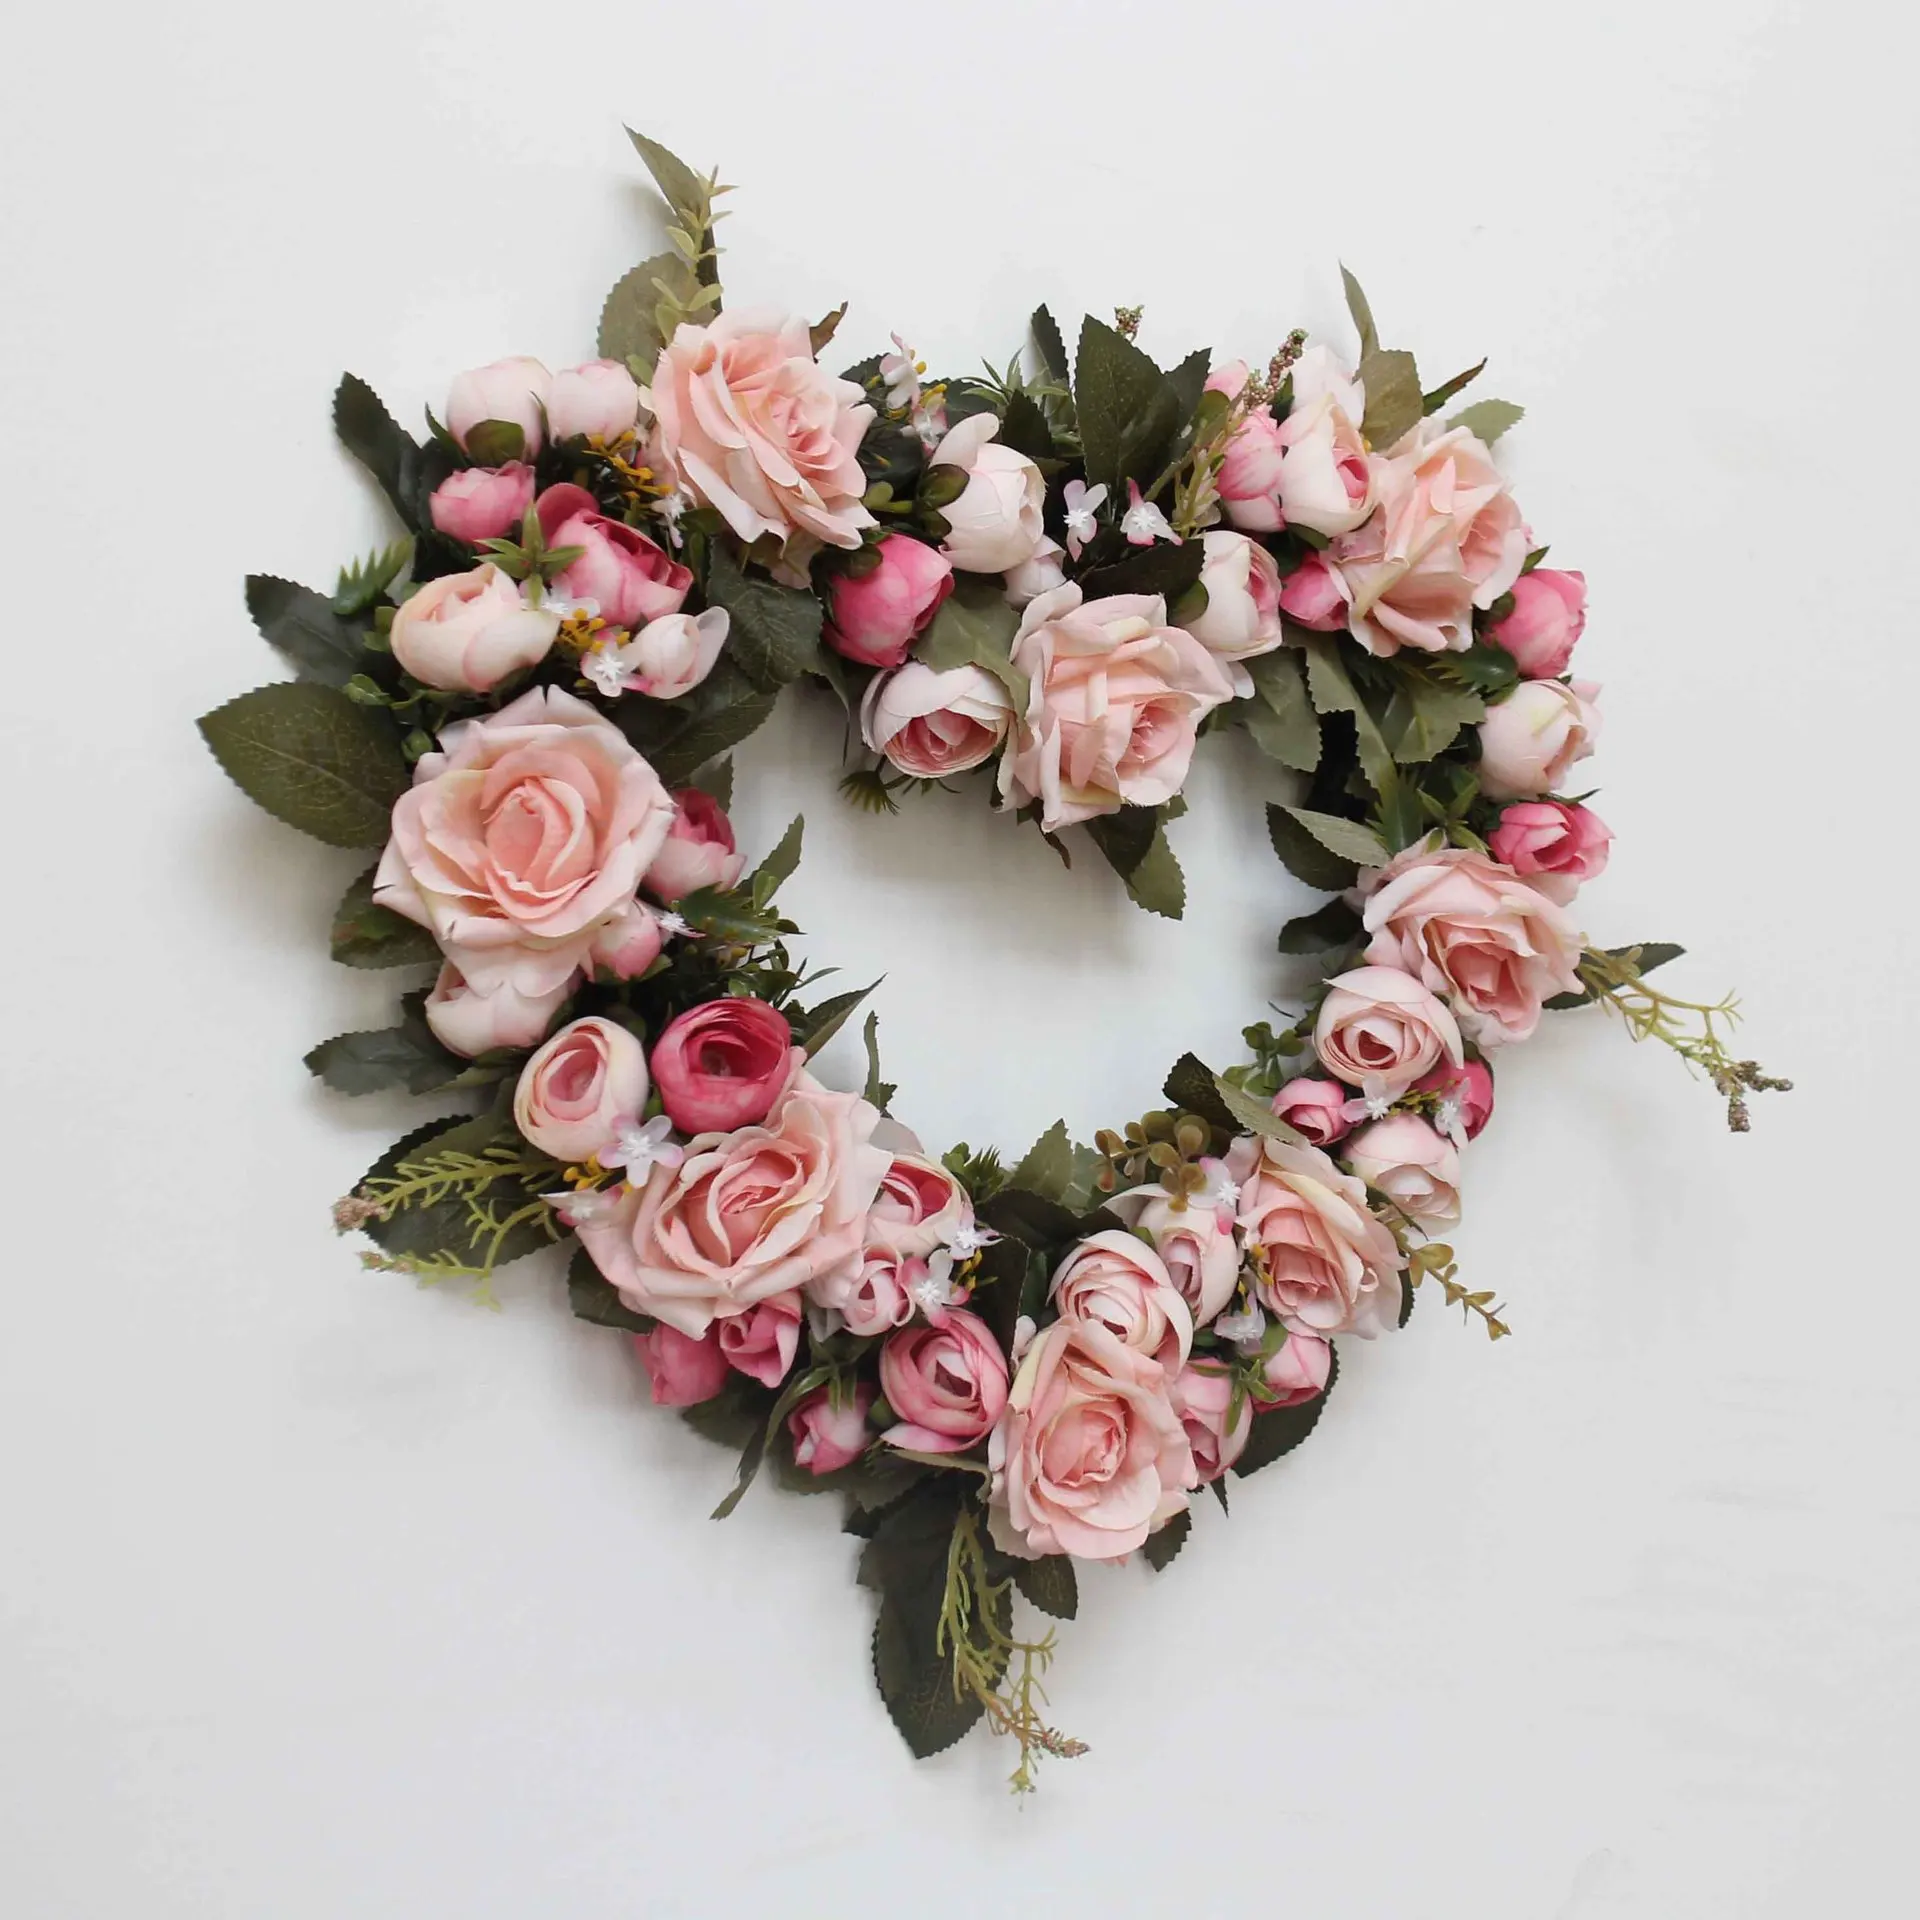 Vintage Art Simulation Flowers Wreath Heart-shaped Garland Party Decor Q9J4 